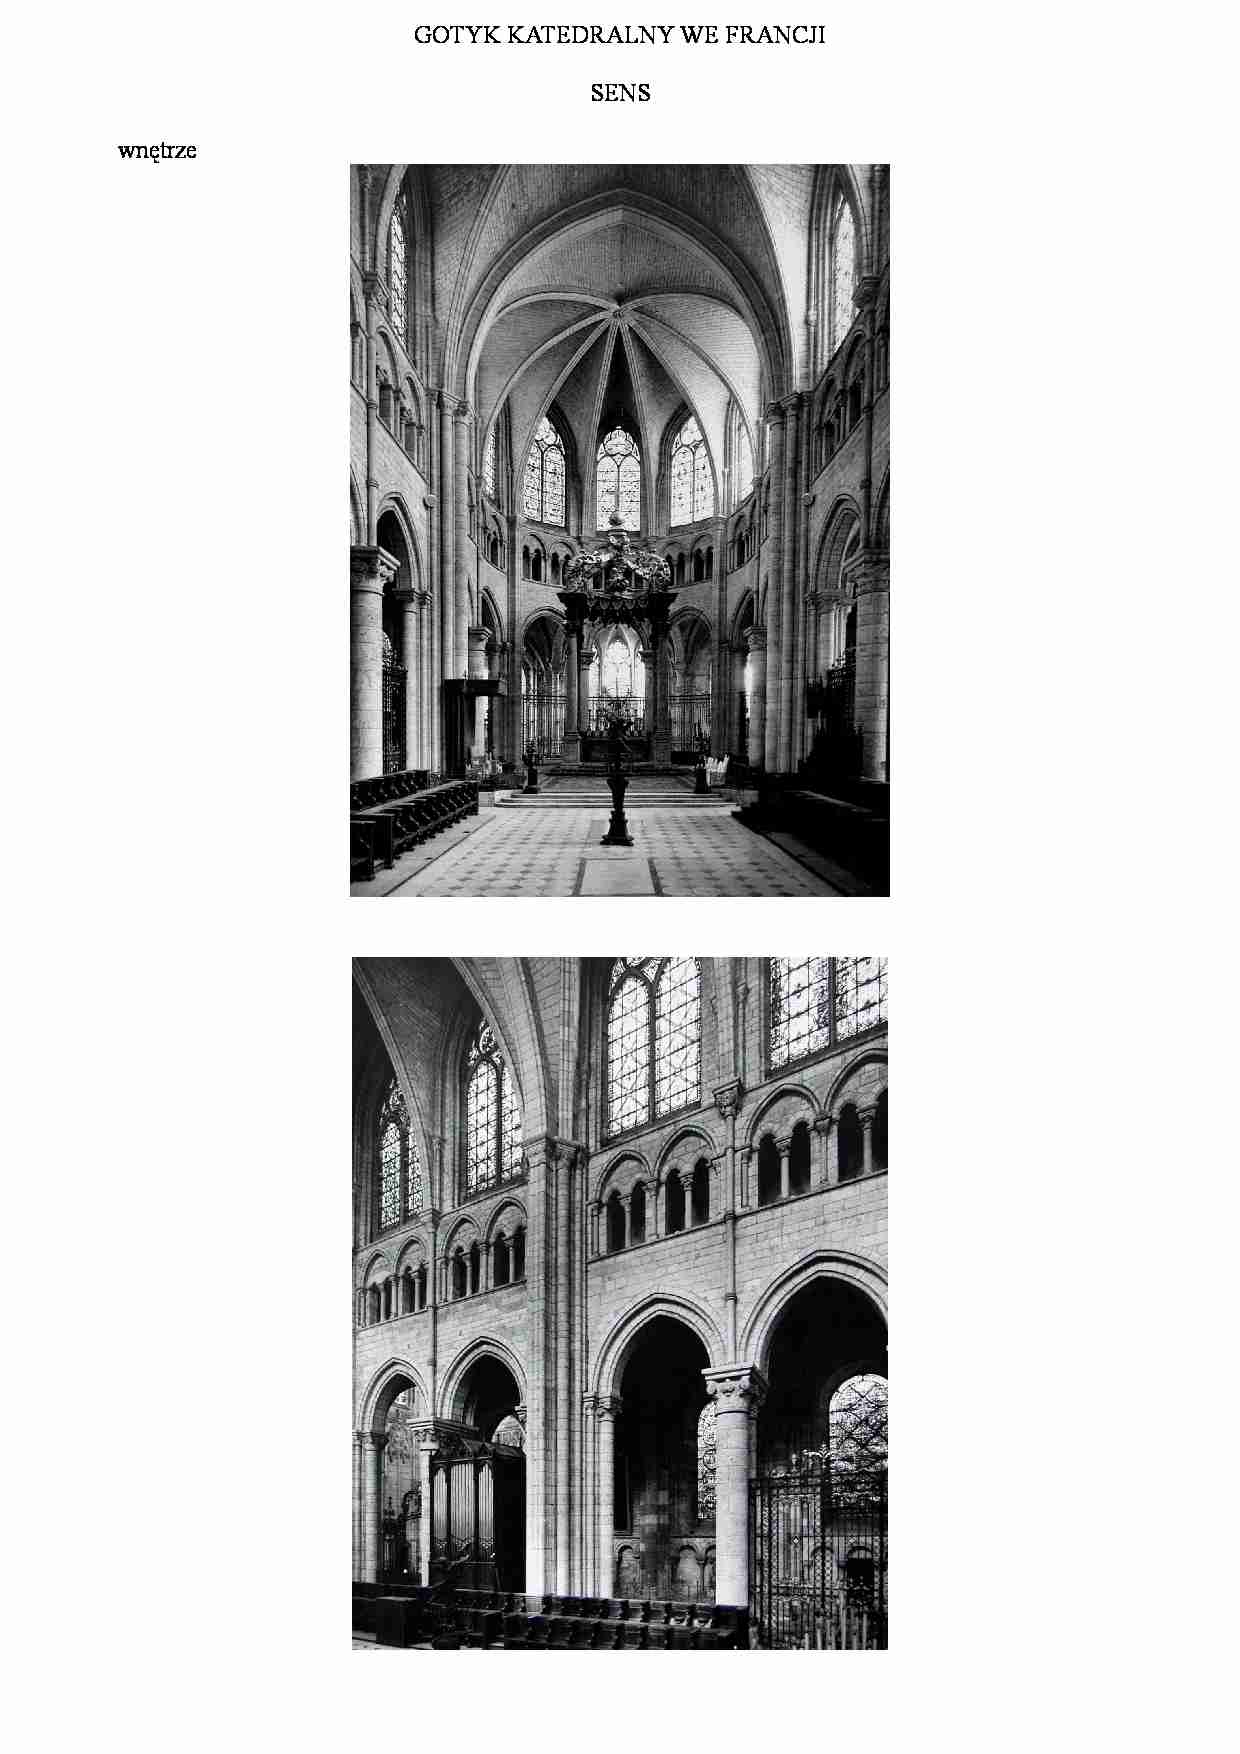 Gotyk katedralny we Francji-Sens - strona 1